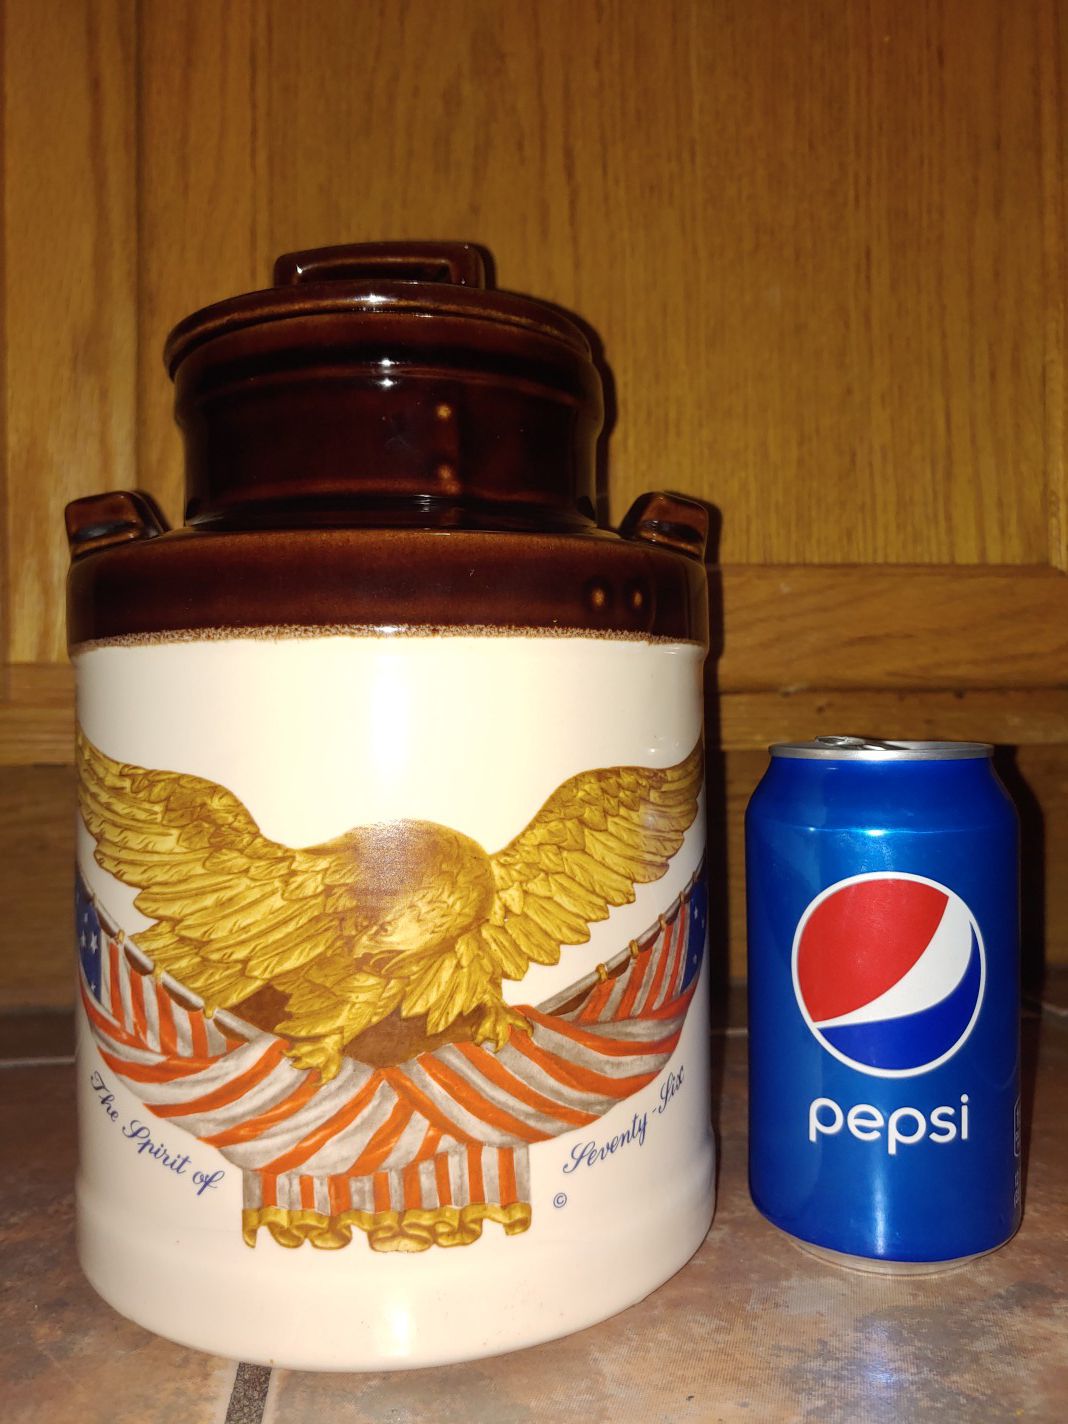 Carved wooden eagle canister/cookie jar